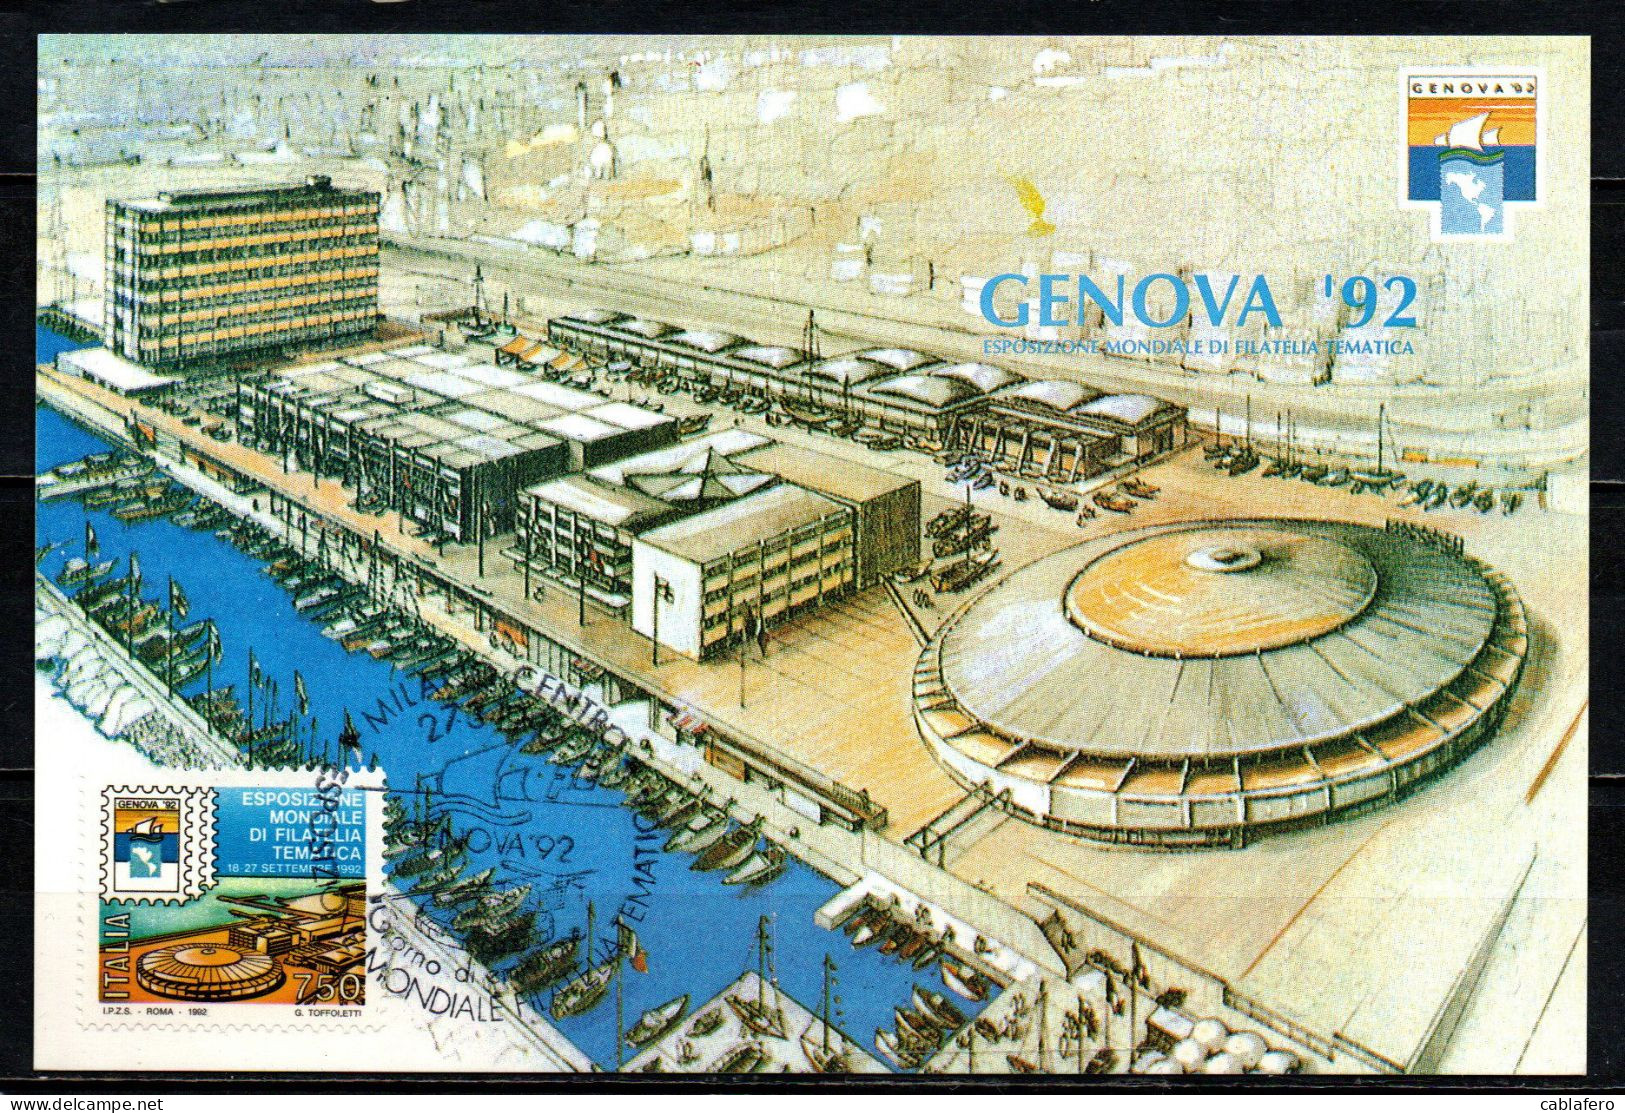 ITALIA - 1992 - ESPOSIZIONE MONDAILE DI FILATYELIA TEMATICA "GENOVA '92" - Maximumkarten (MC)